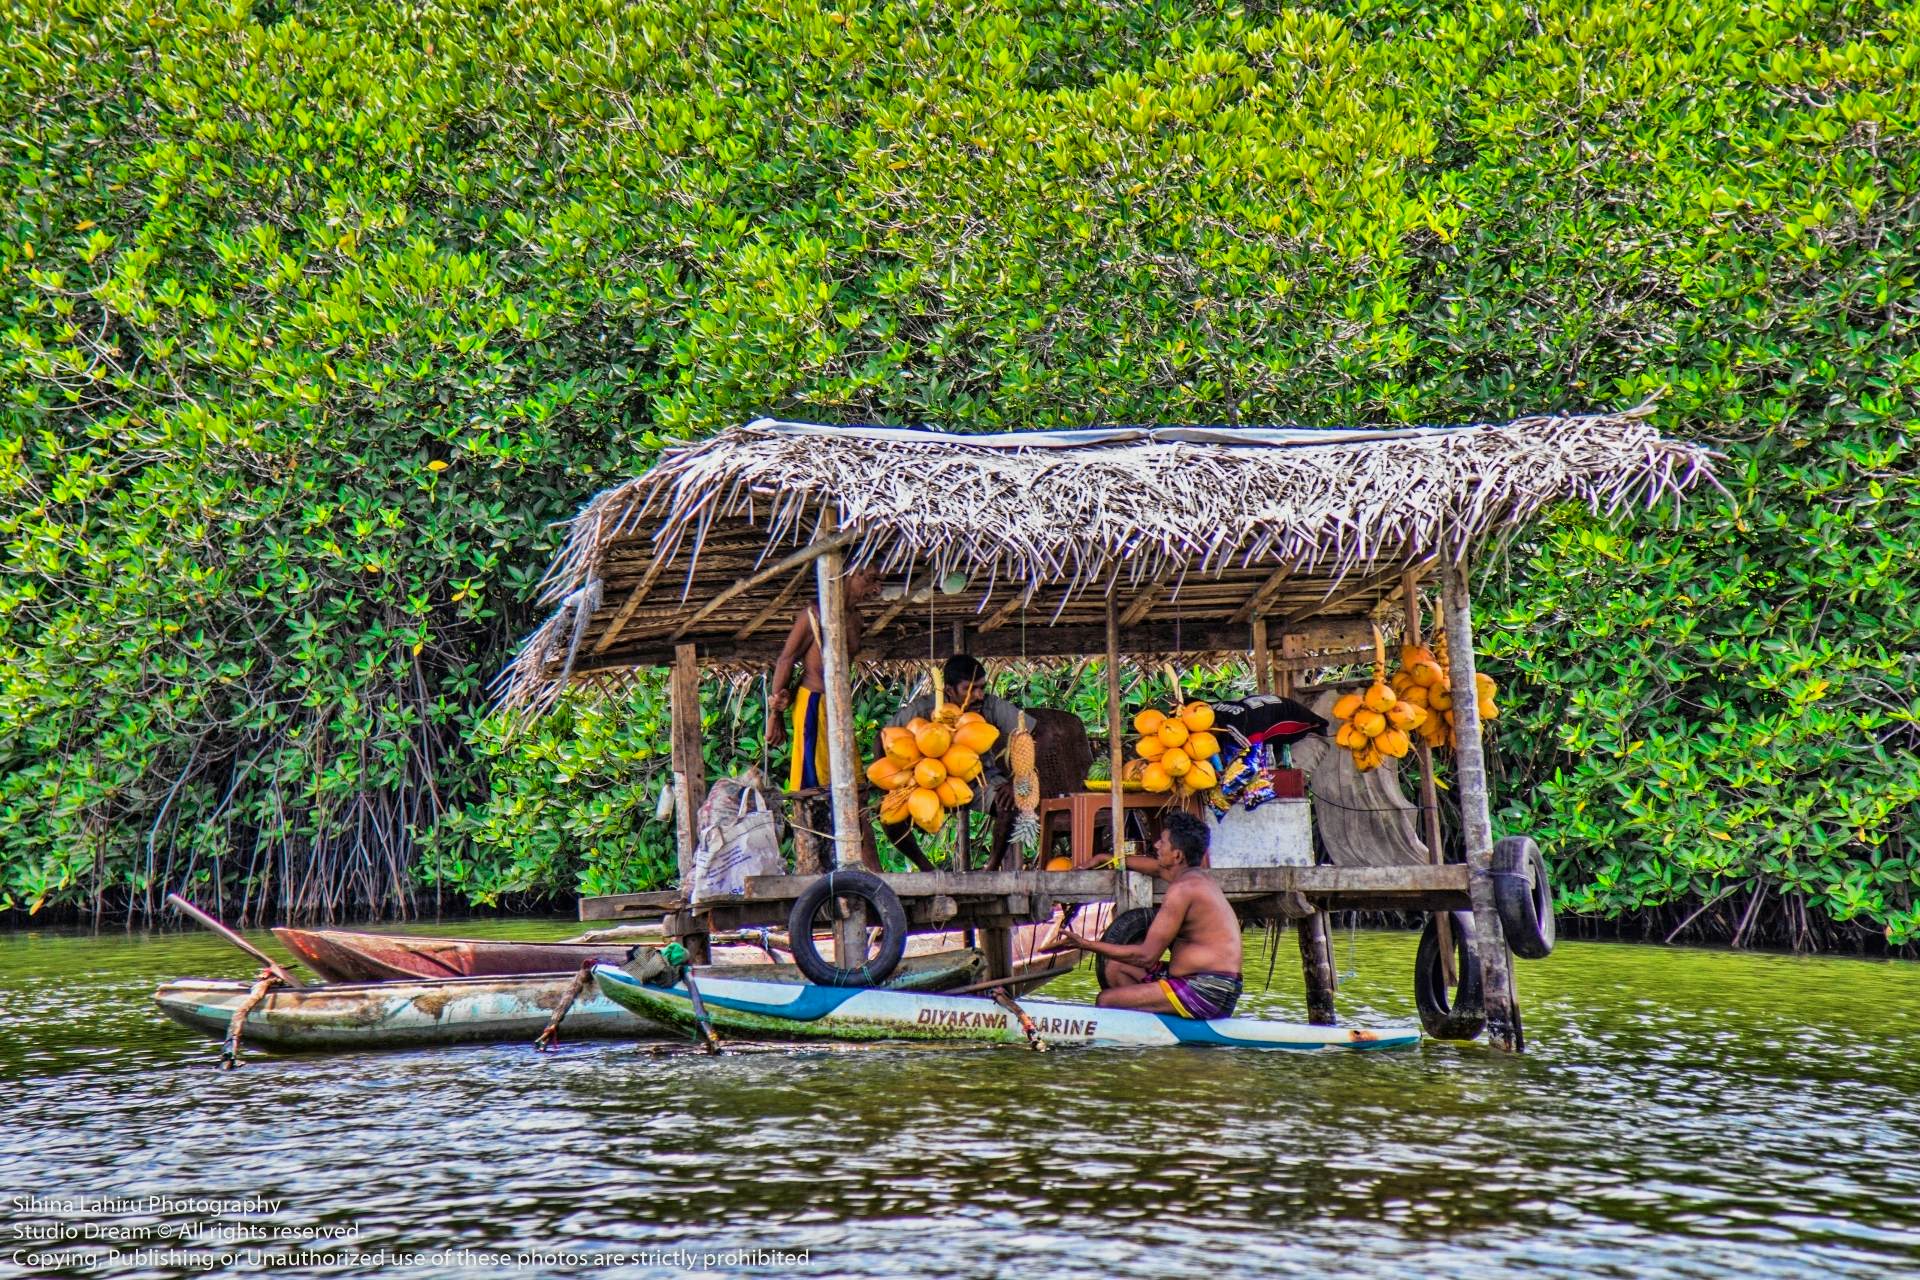 Madu River Boat Safari- Entrance Fee 15 USD Per Boat Pay Directly